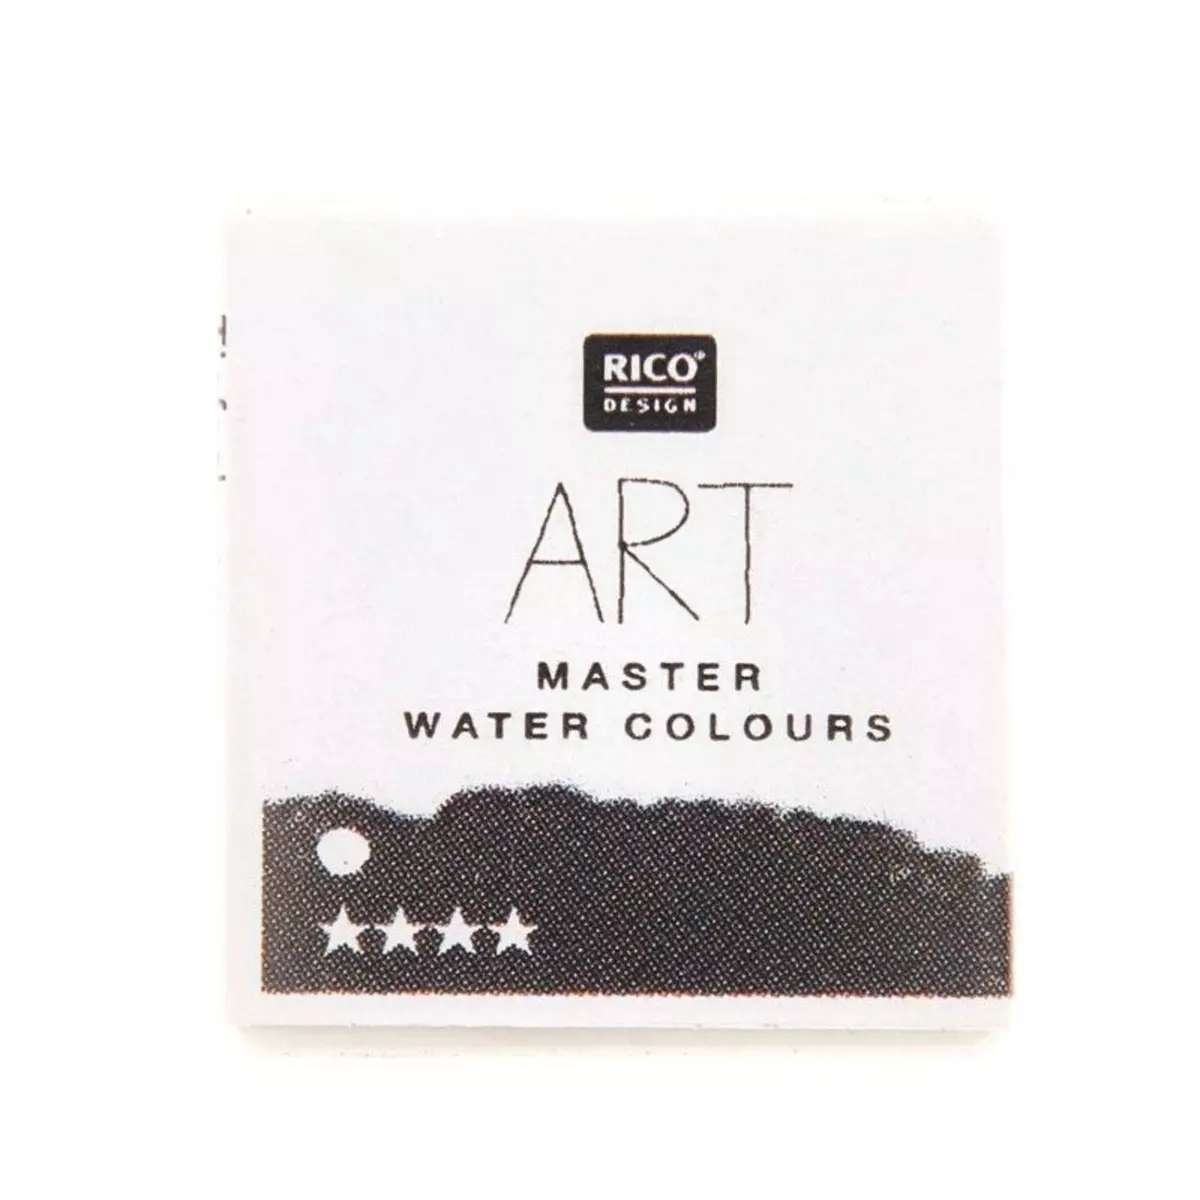 RICO DESIGN Peinture Aquarelle - Noir profond - 1/2 godet